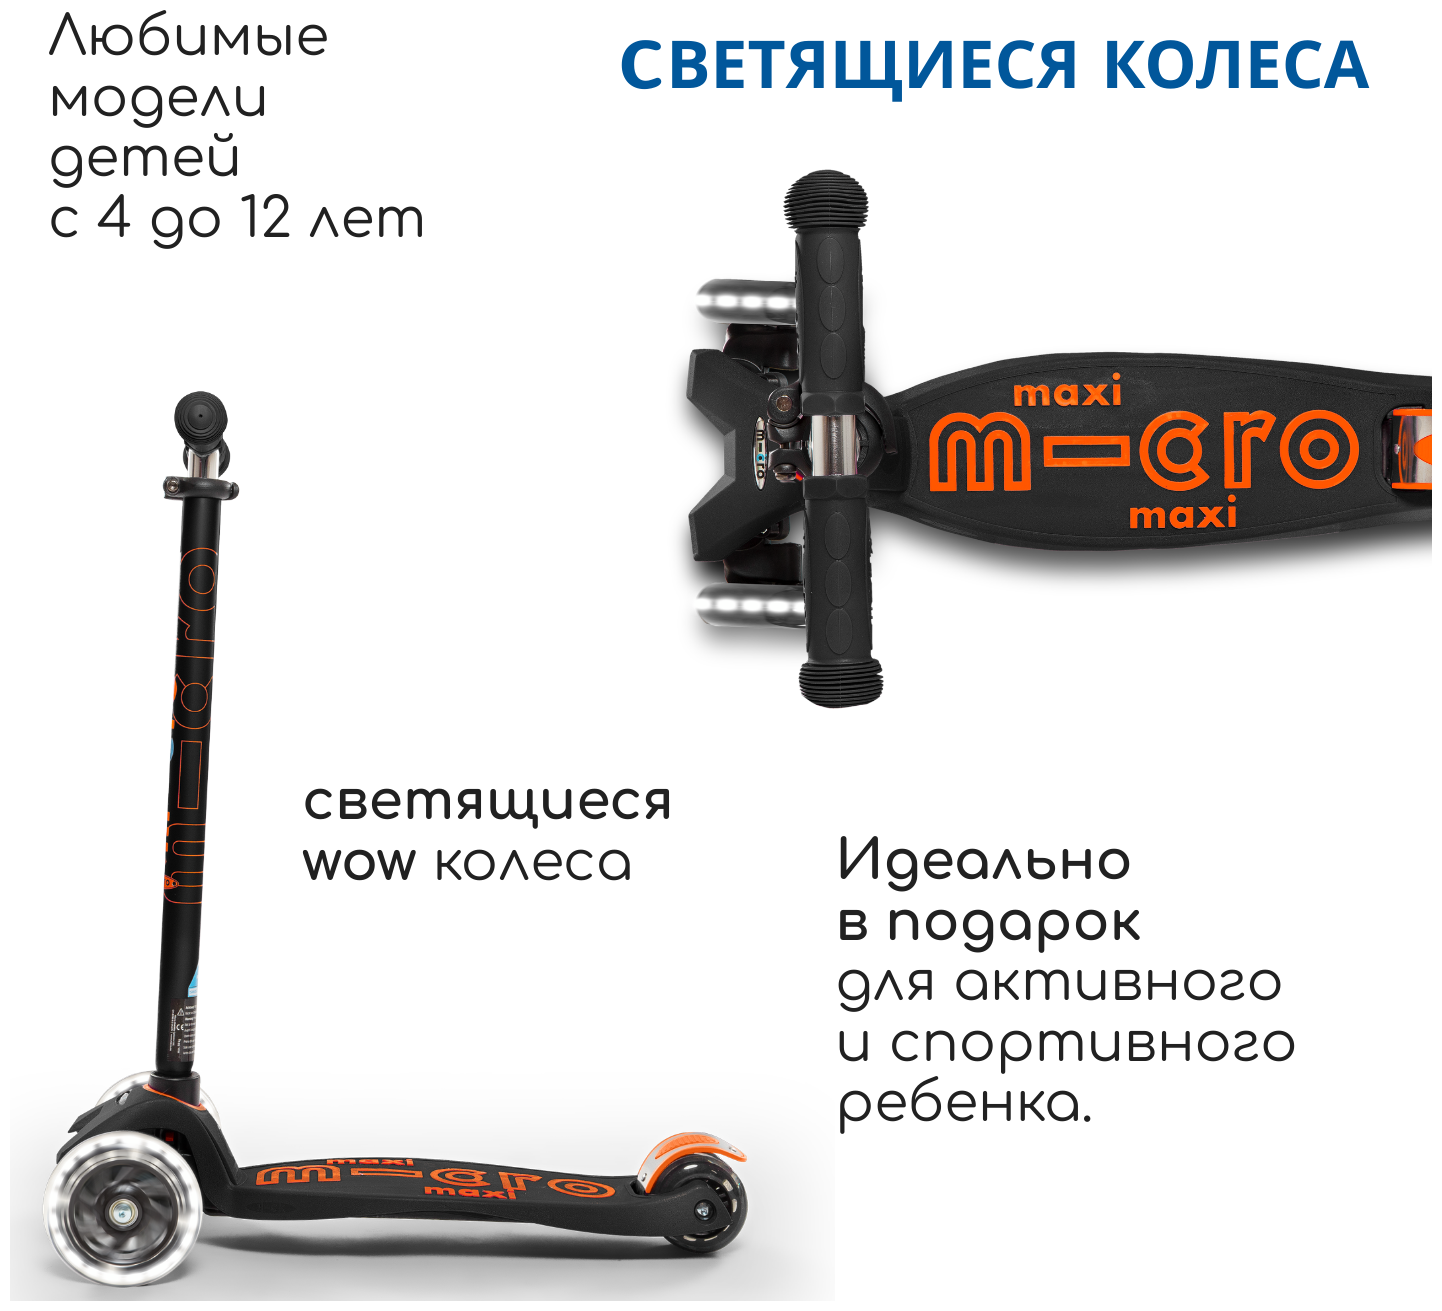 Детский Самокат Maxi Micro Deluxe черно-оранжевый LED